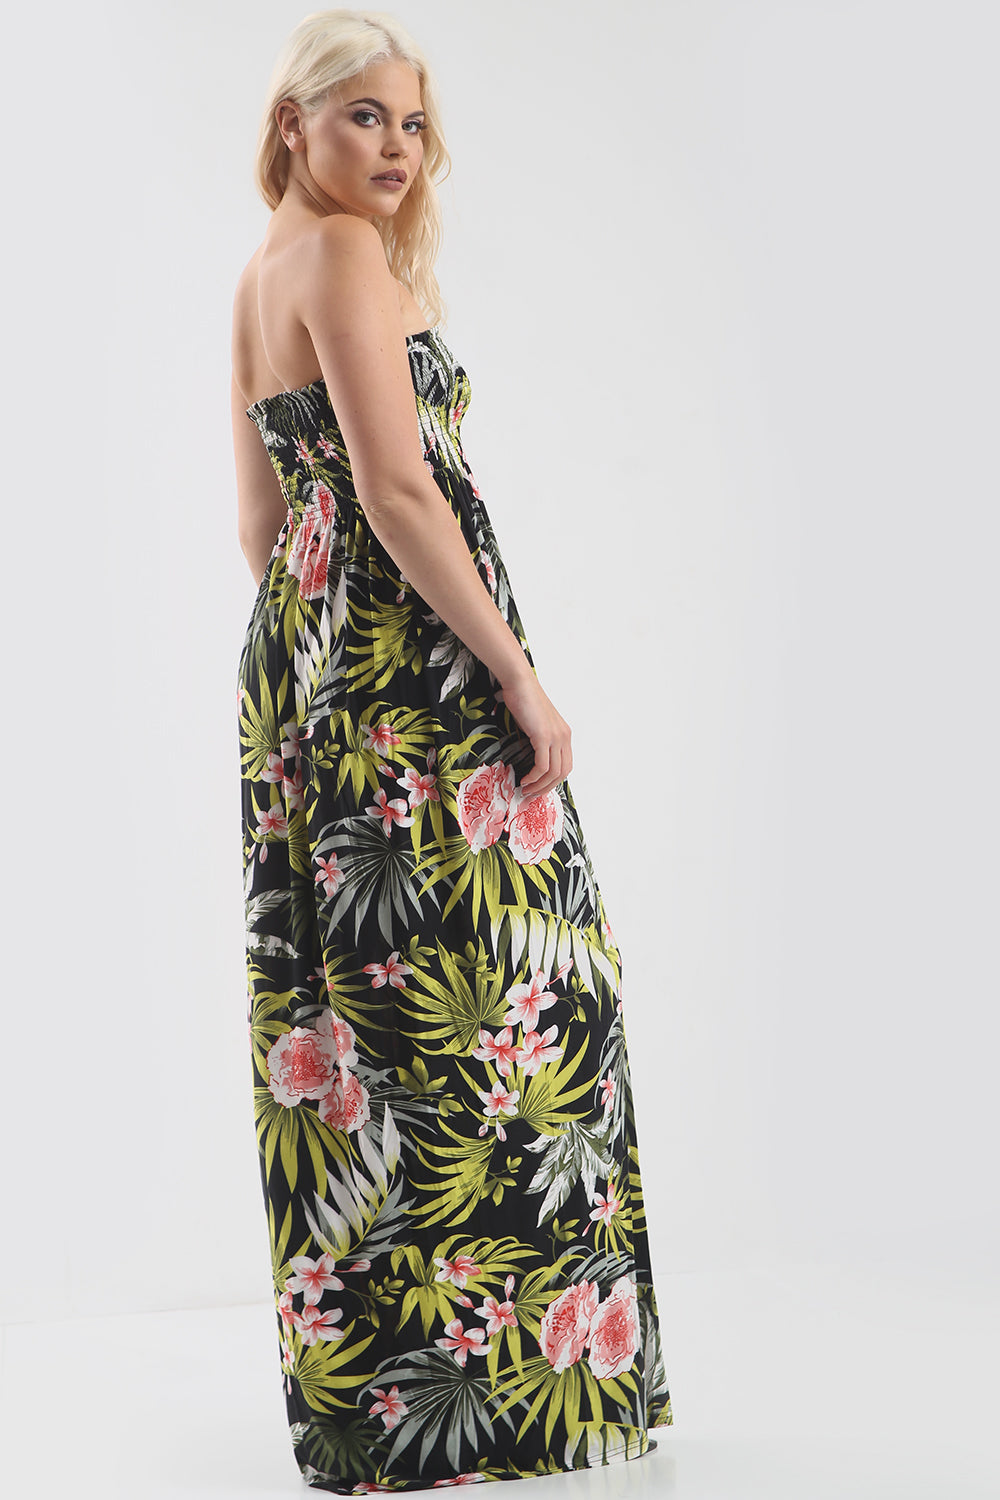 Tropical Print Bardot Black Maxi Dress